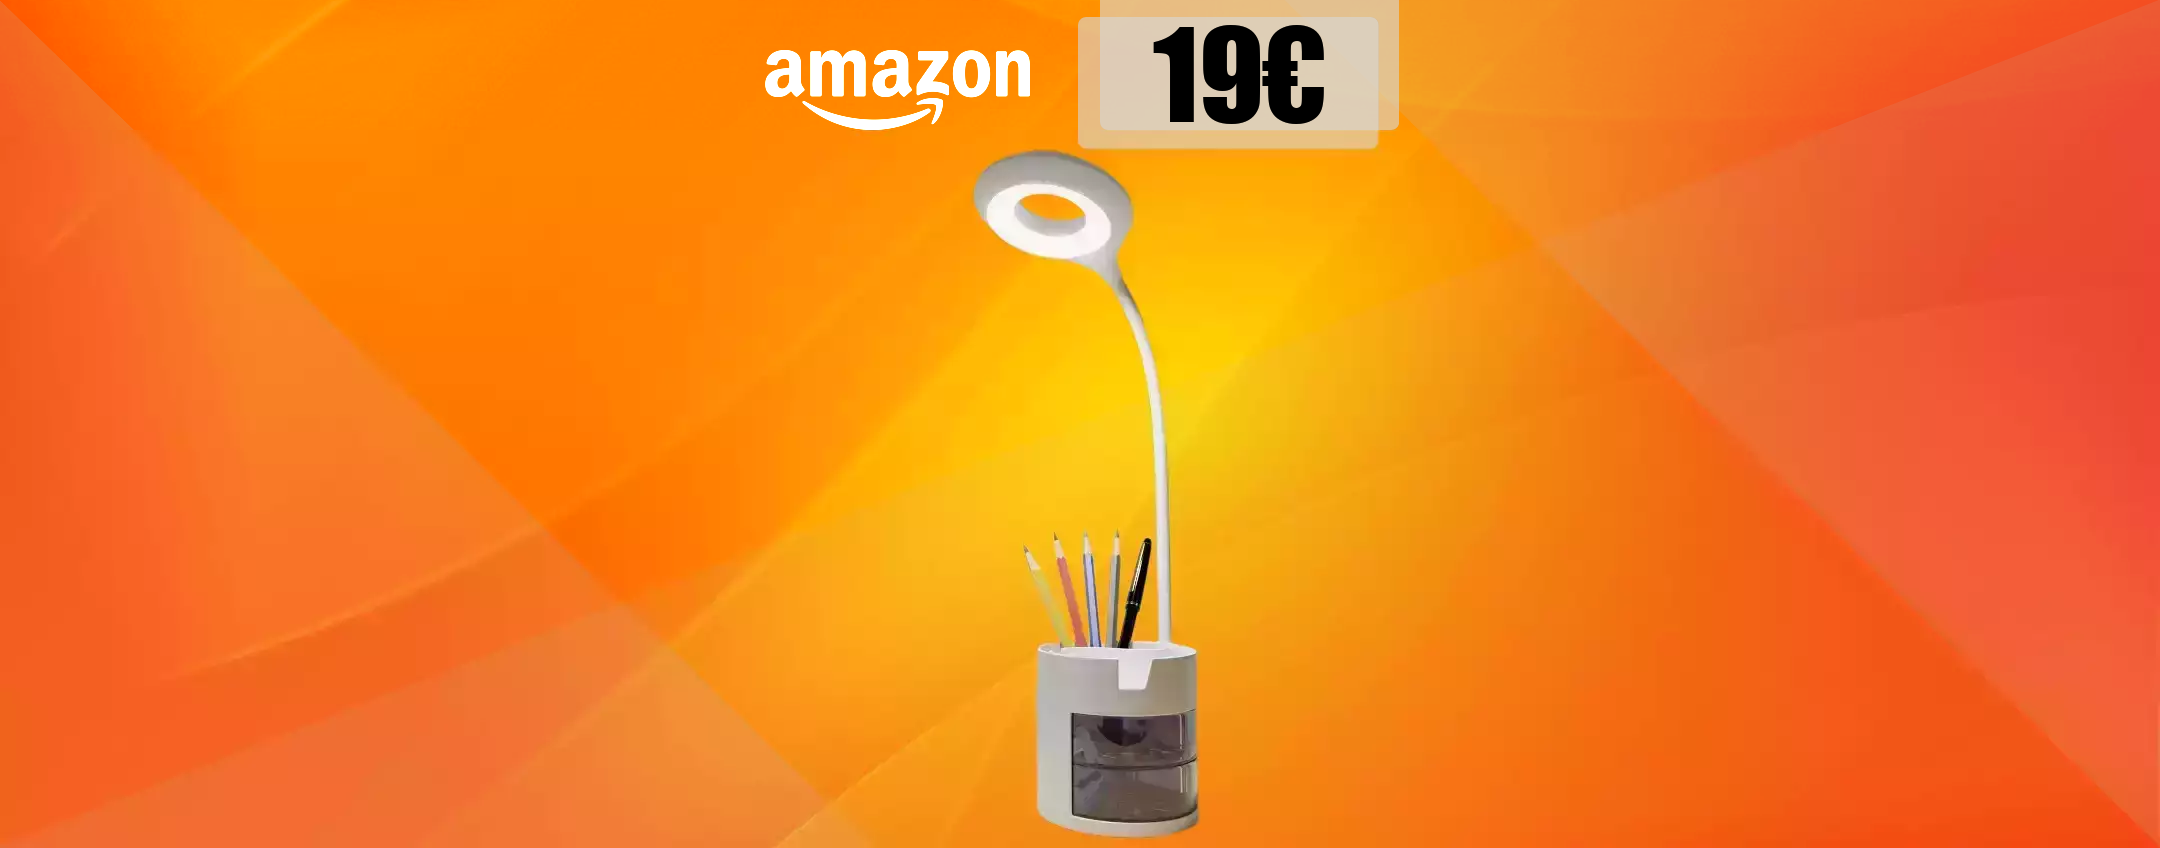 Lampada LED regolabile e RICARICABILE: una vera bellezza a soli 19€